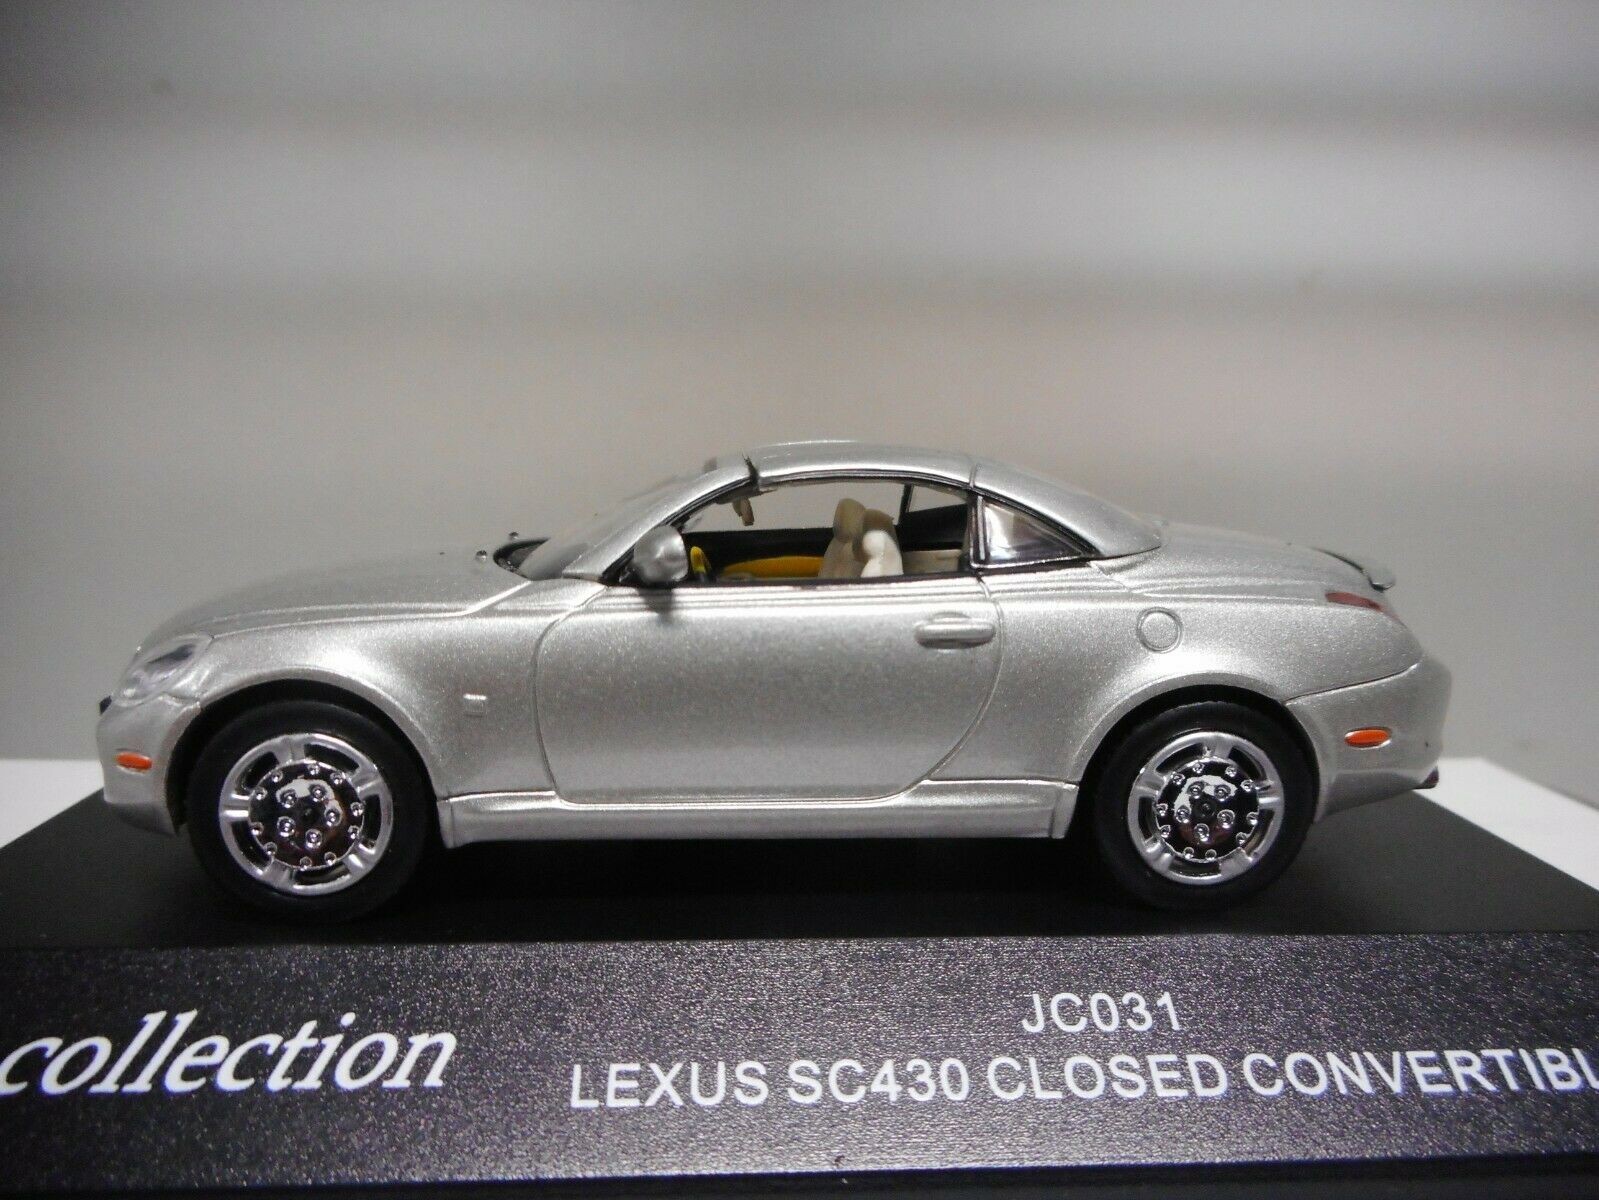 LEXUS SC430 CLOSED CONVERTIBLE J-COLLECTION 1:43 - BCN STOCK CARS